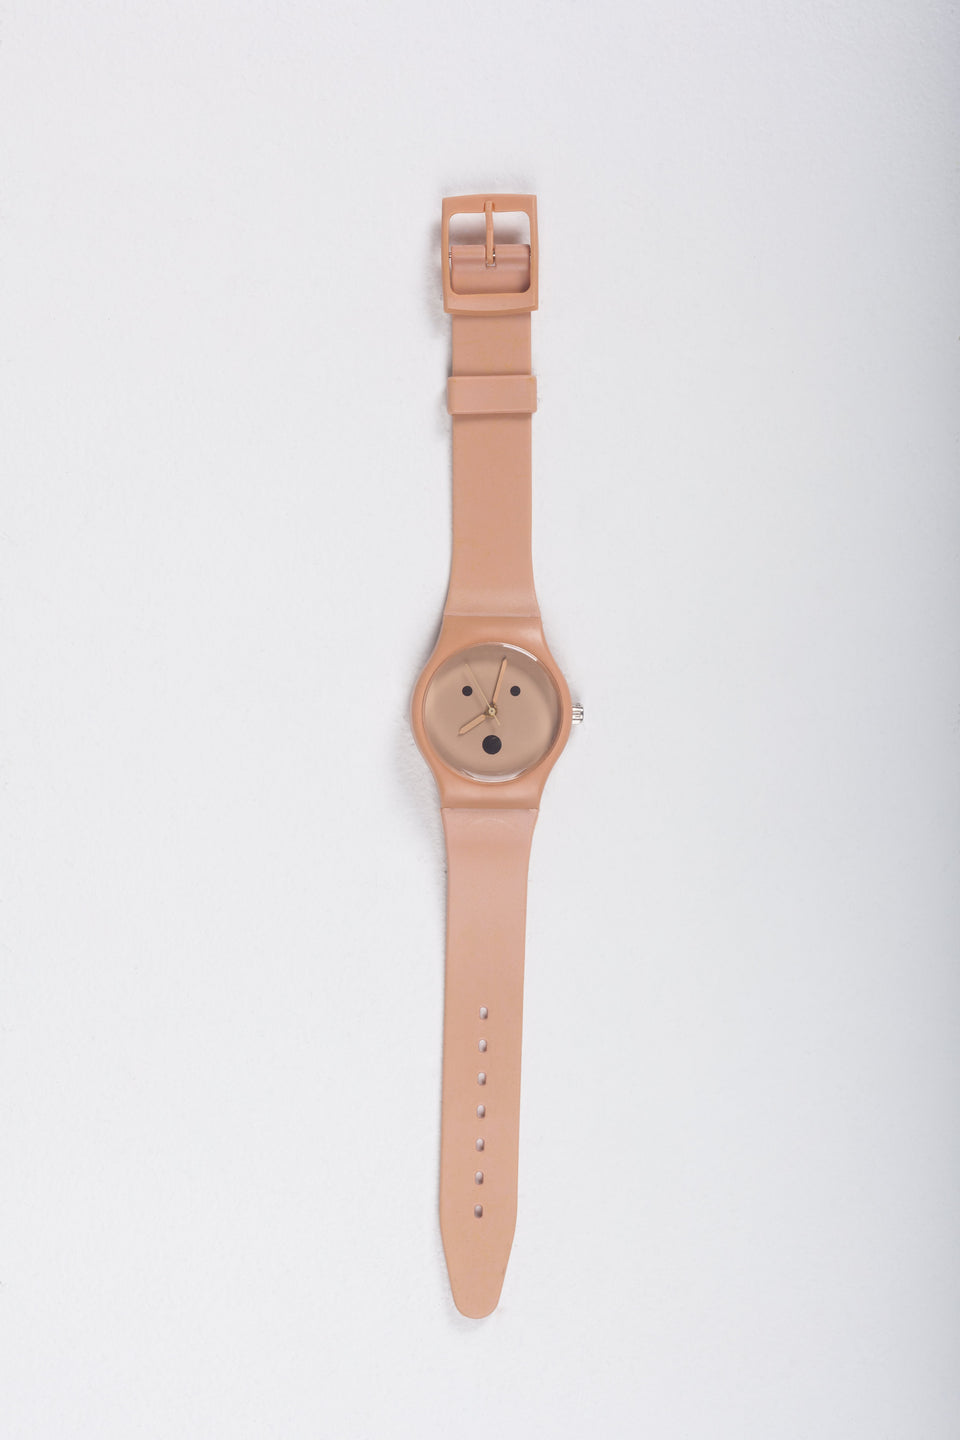 Wristwatch “Ollo” by Museo Alchimia Alessandro Mendini, Italy, 1990